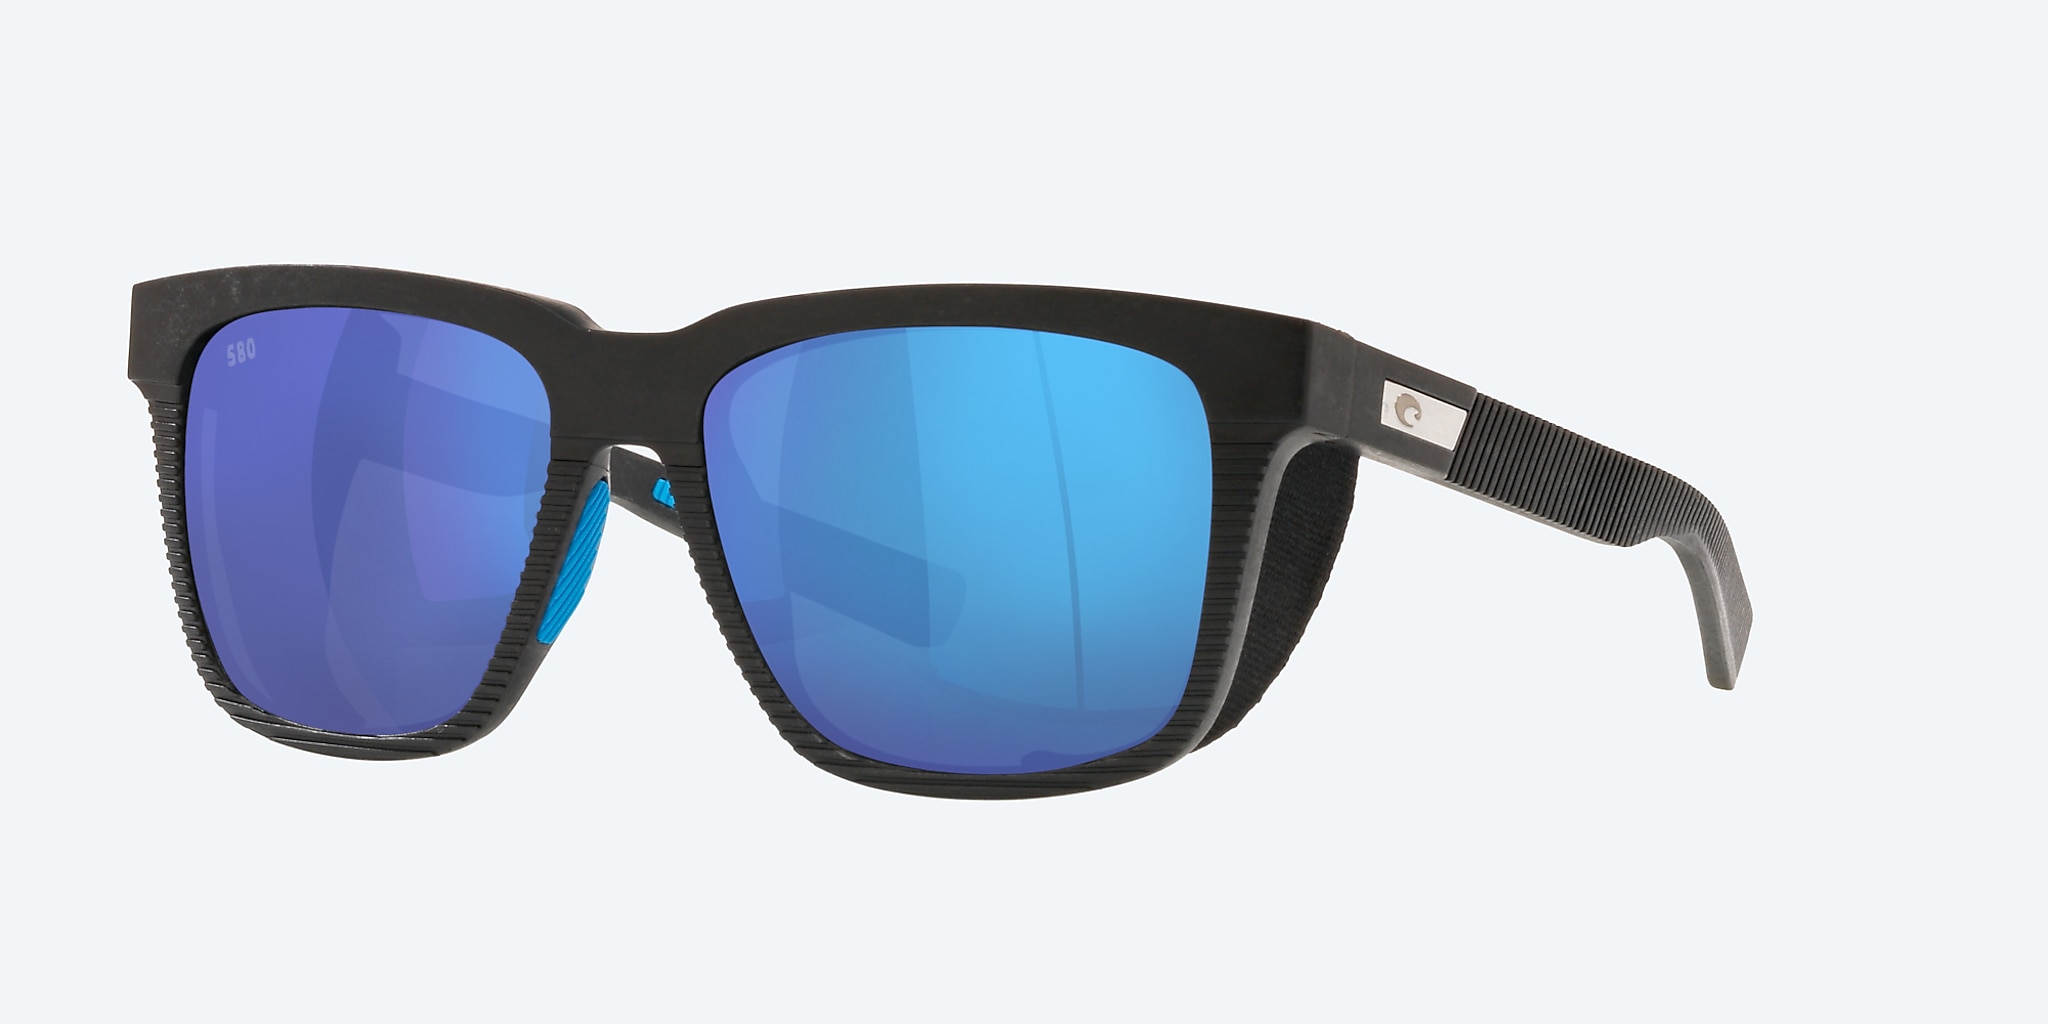 Premium Polarized Sunglasses - Effective UV Protection